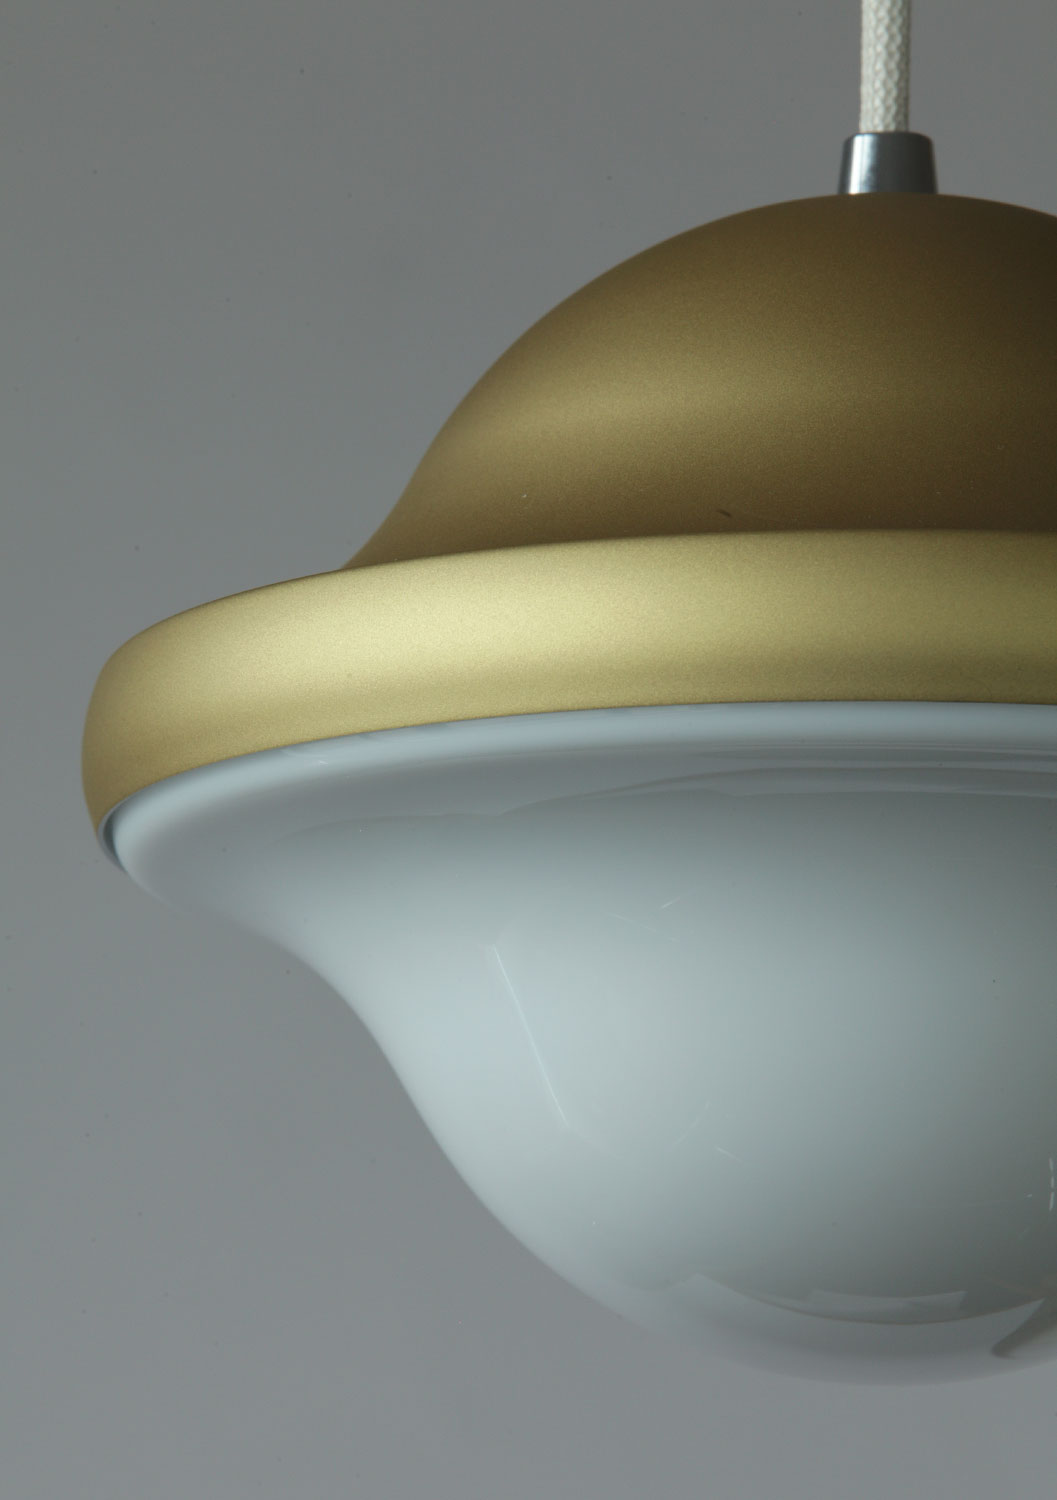 BUBI Leuchten-Designklassiker von Henning Koppel: matt golden lackiert